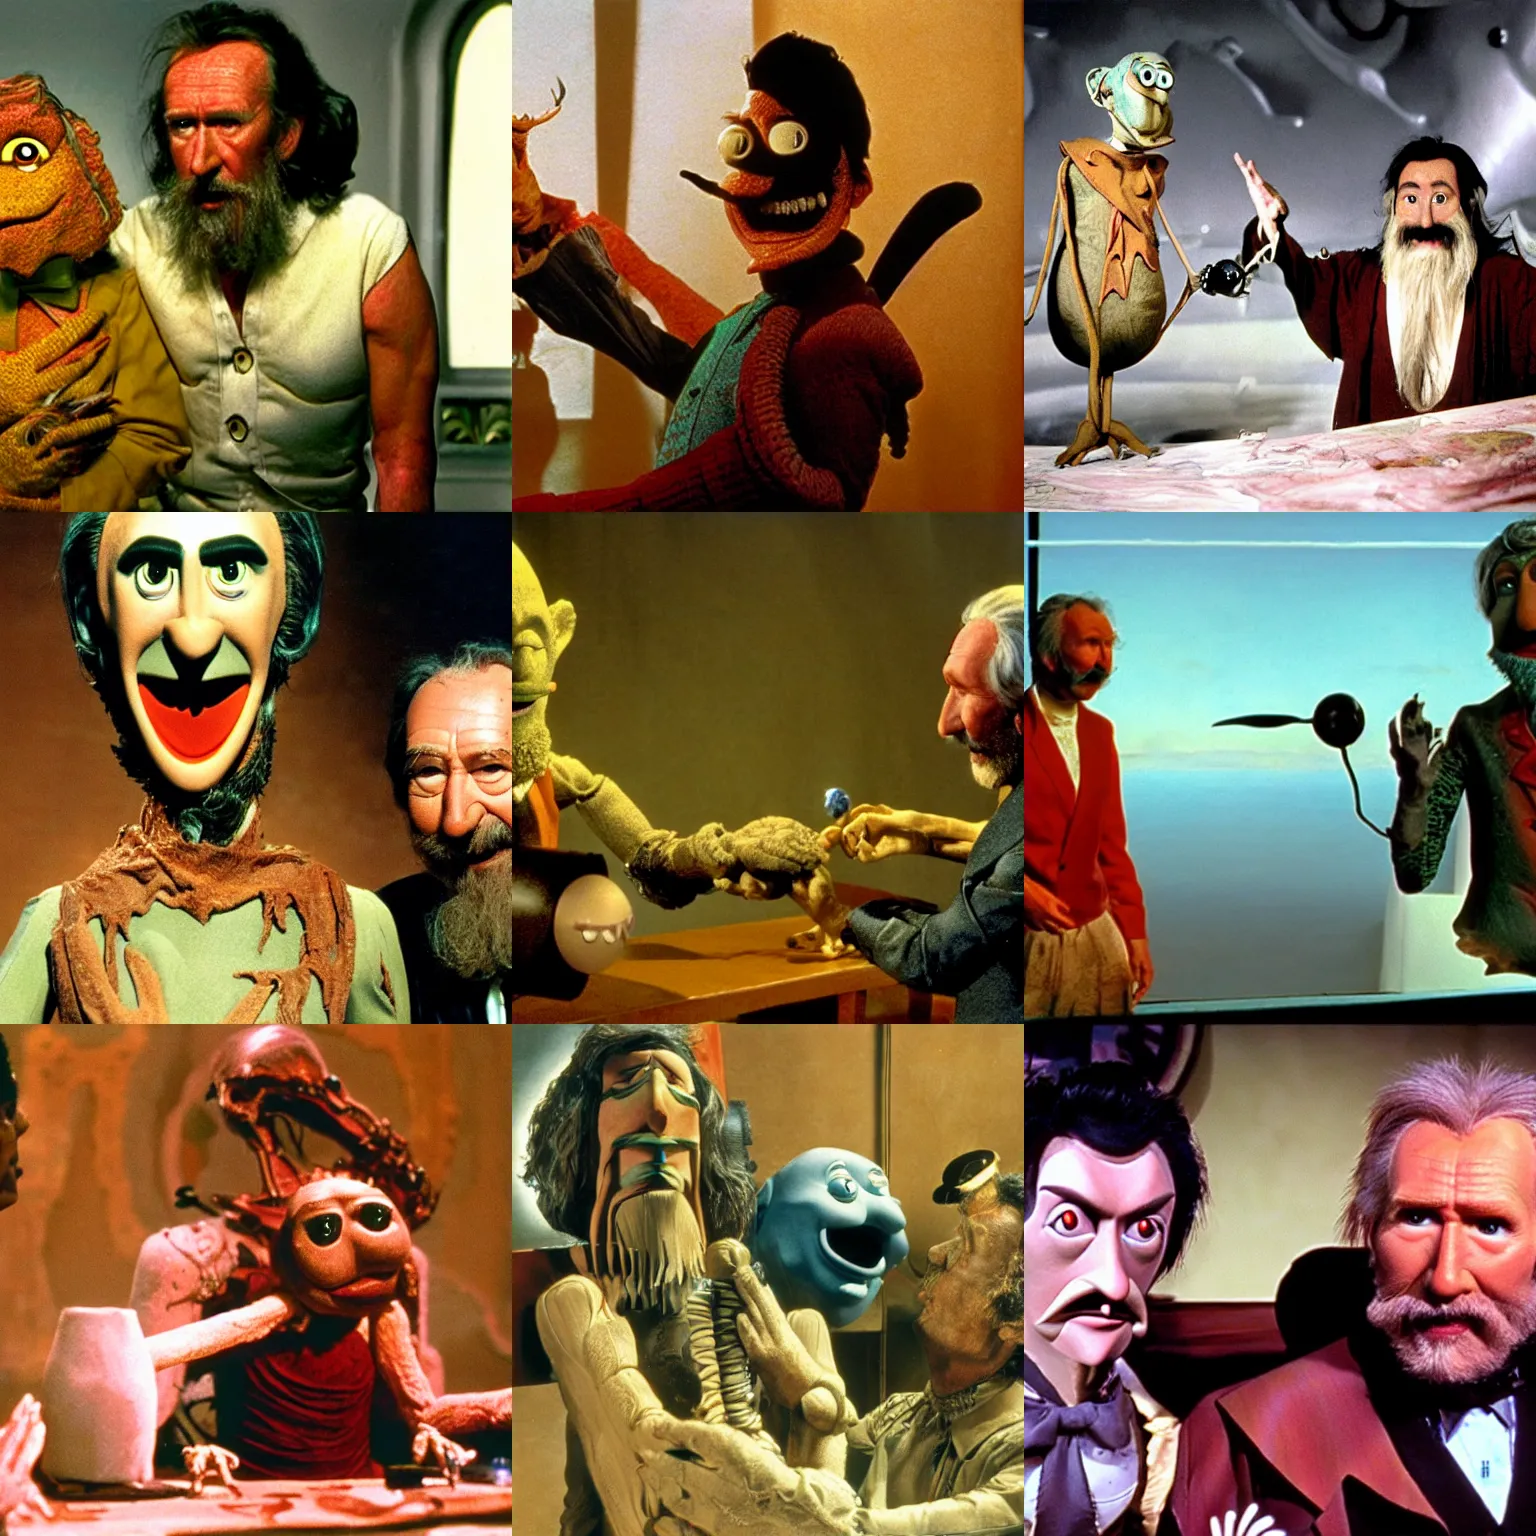 Prompt: jim henson puppet animatronic akira salvador dali cinematic movie still 8 k